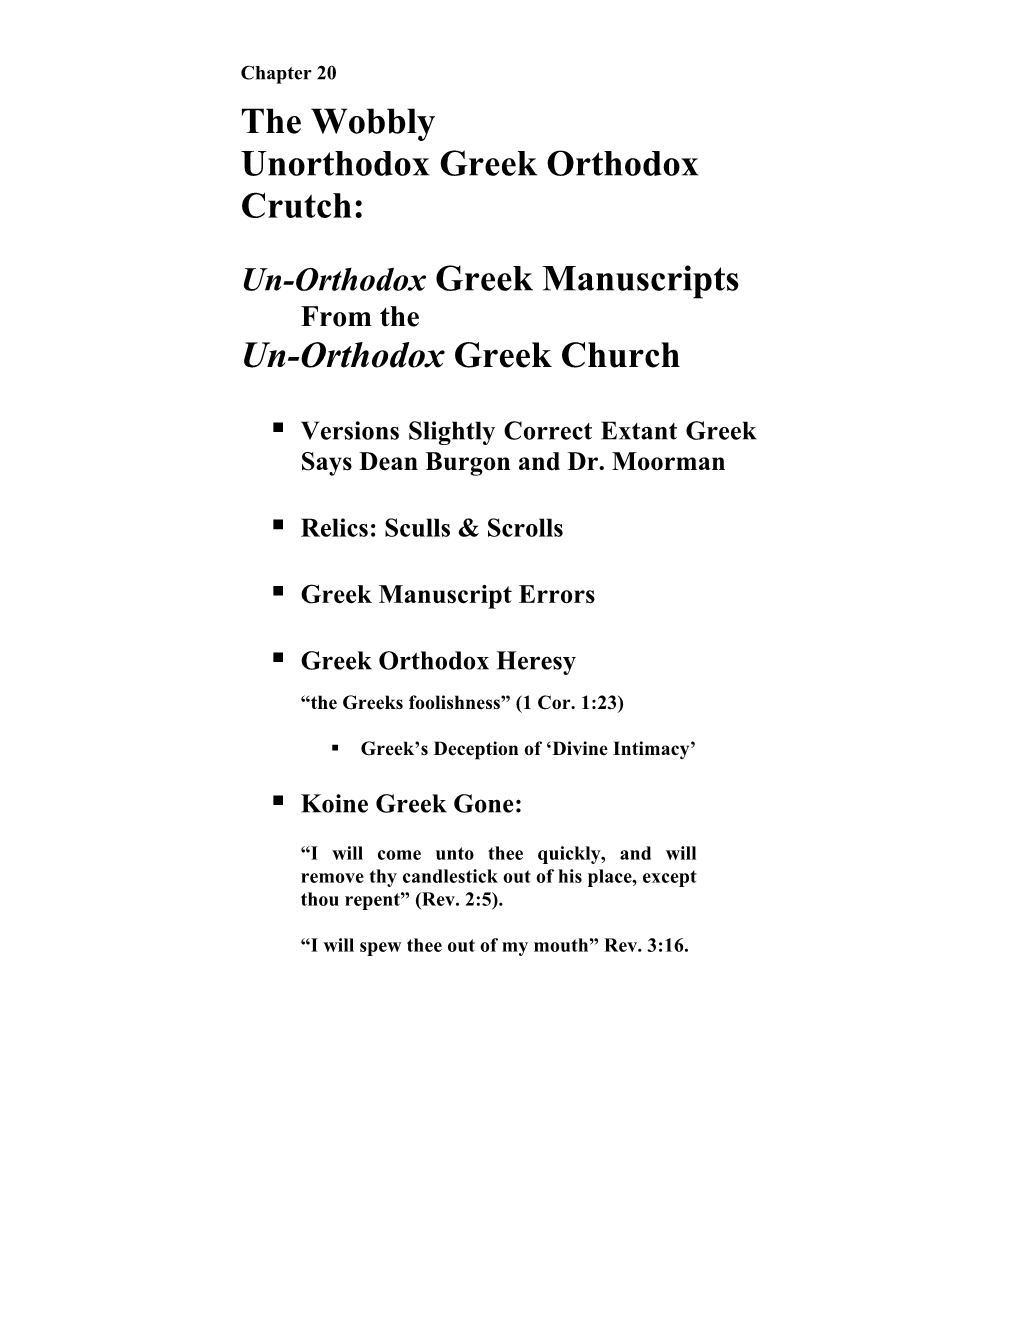 The Wobbly Unorthodox Greek Orthodox Crutch